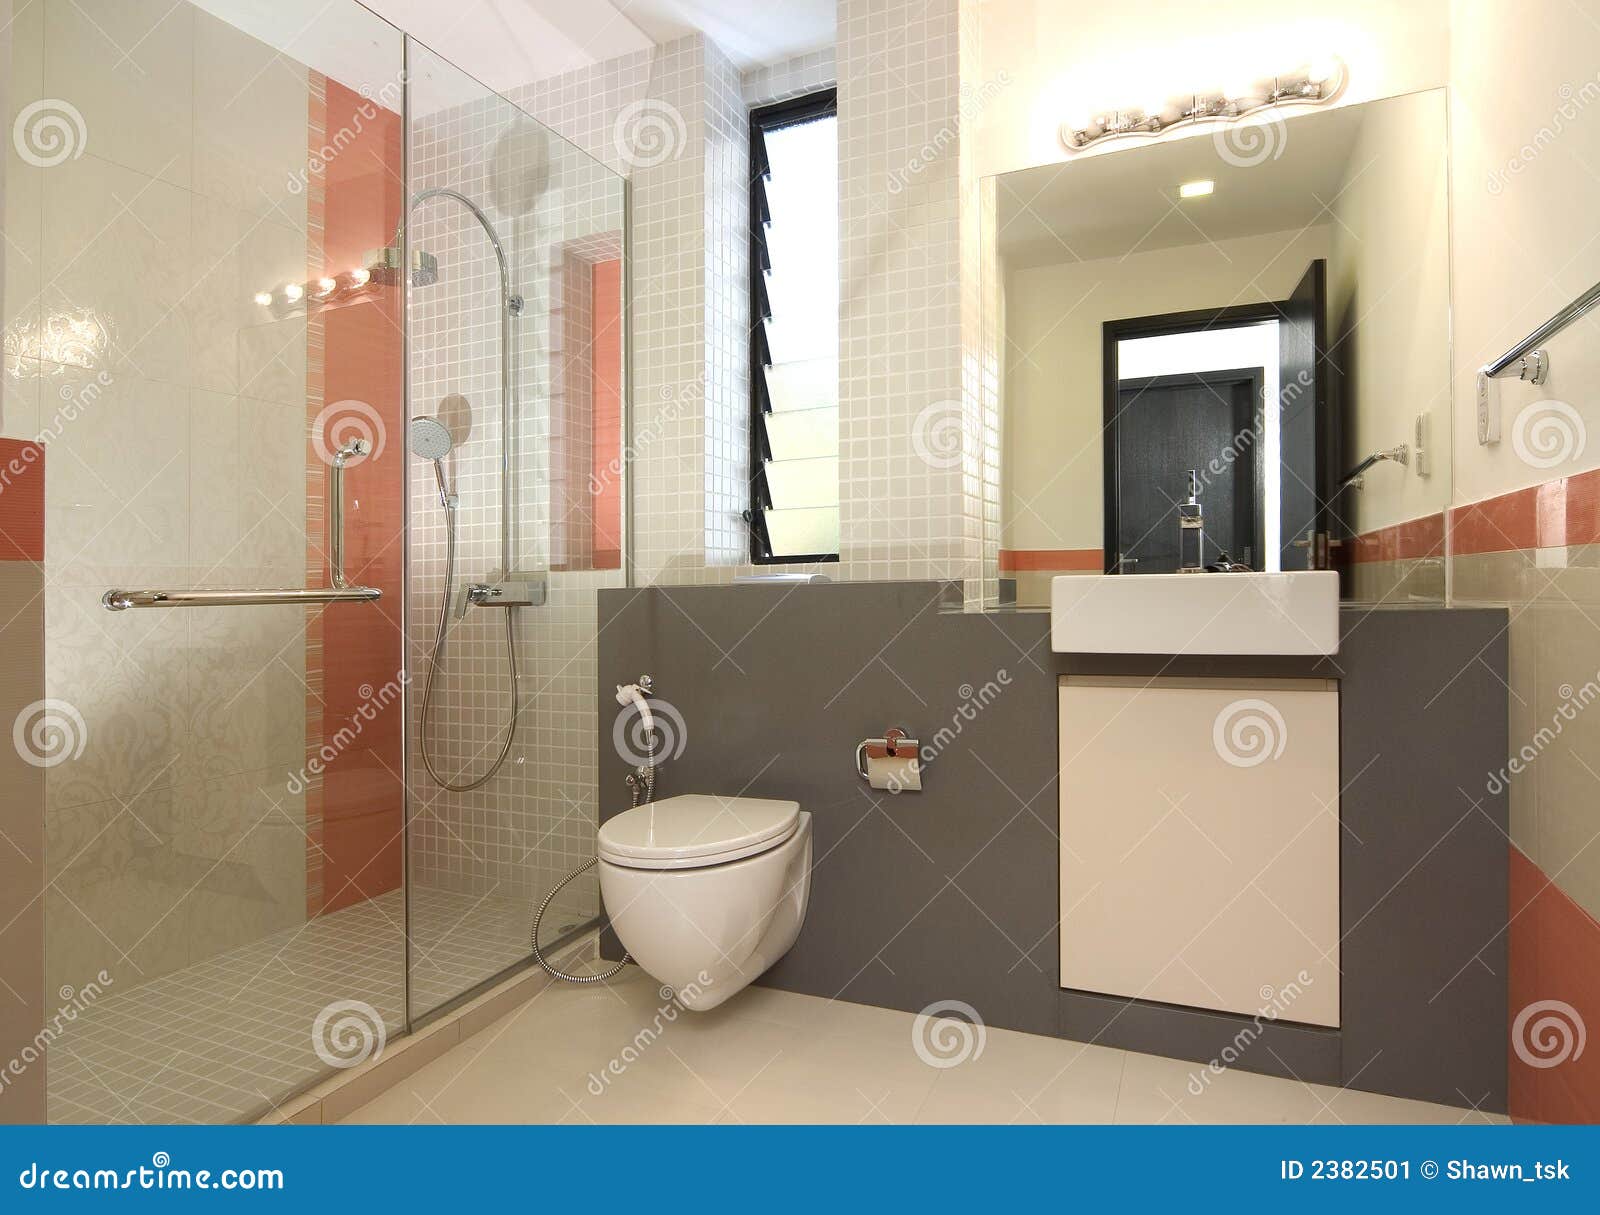 Interior Design - Bathroom Stock Image - Image: 2382501